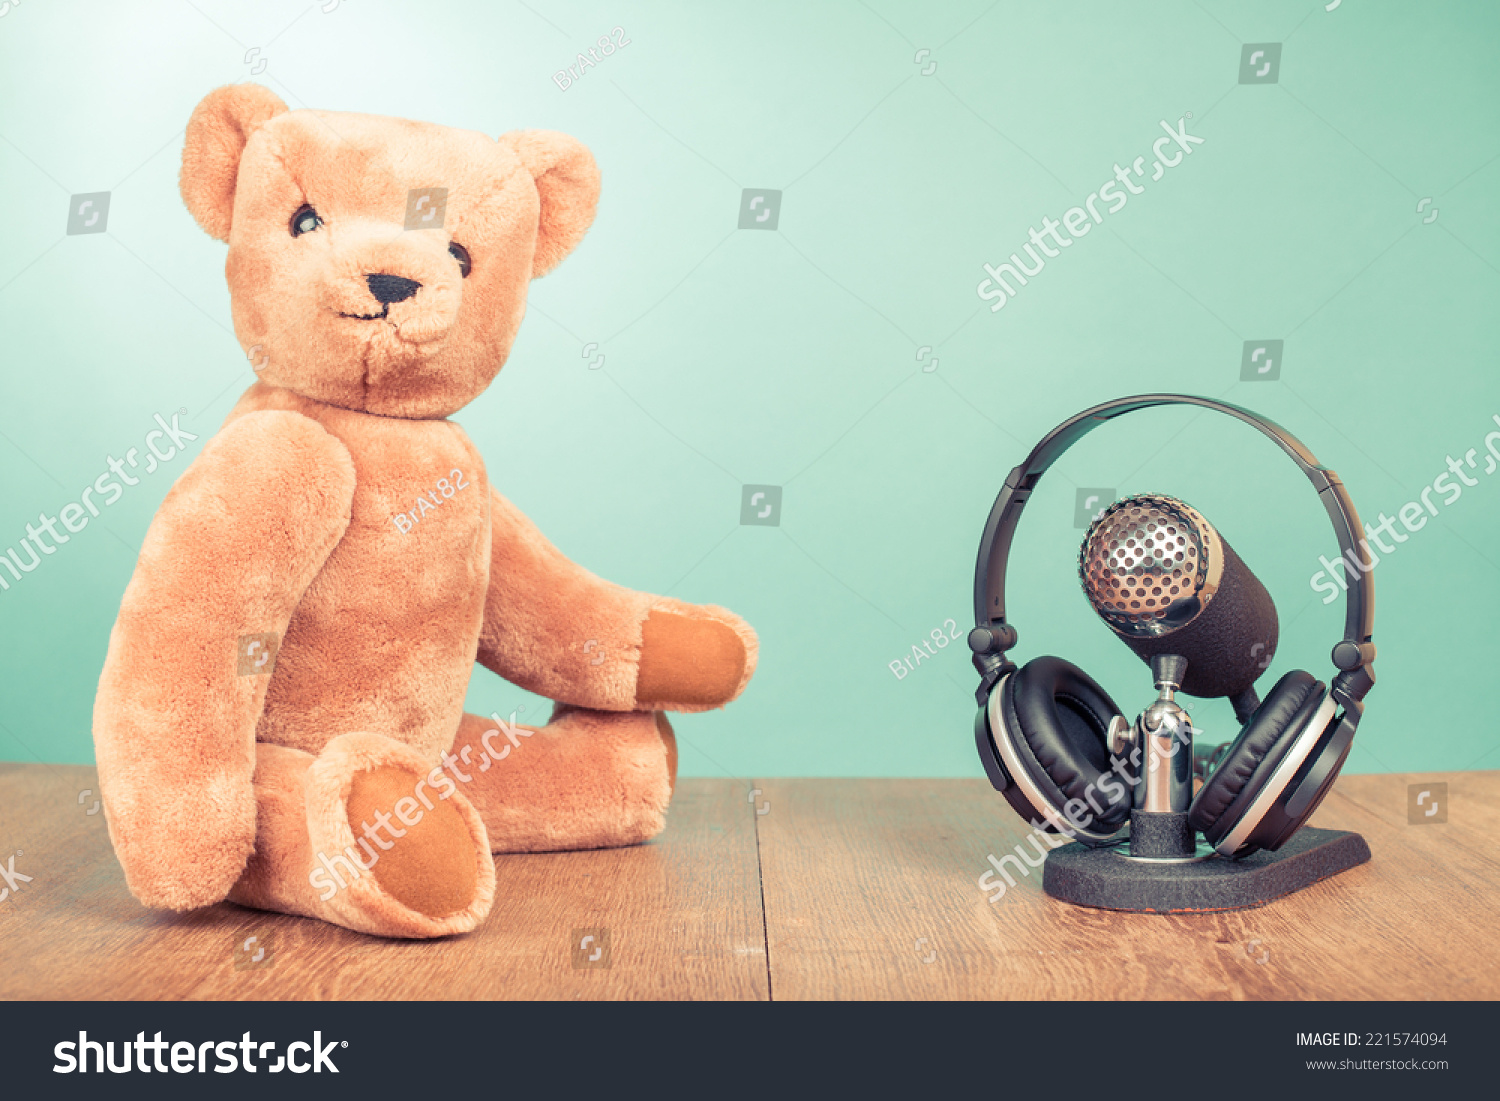 teddy bear with microphone